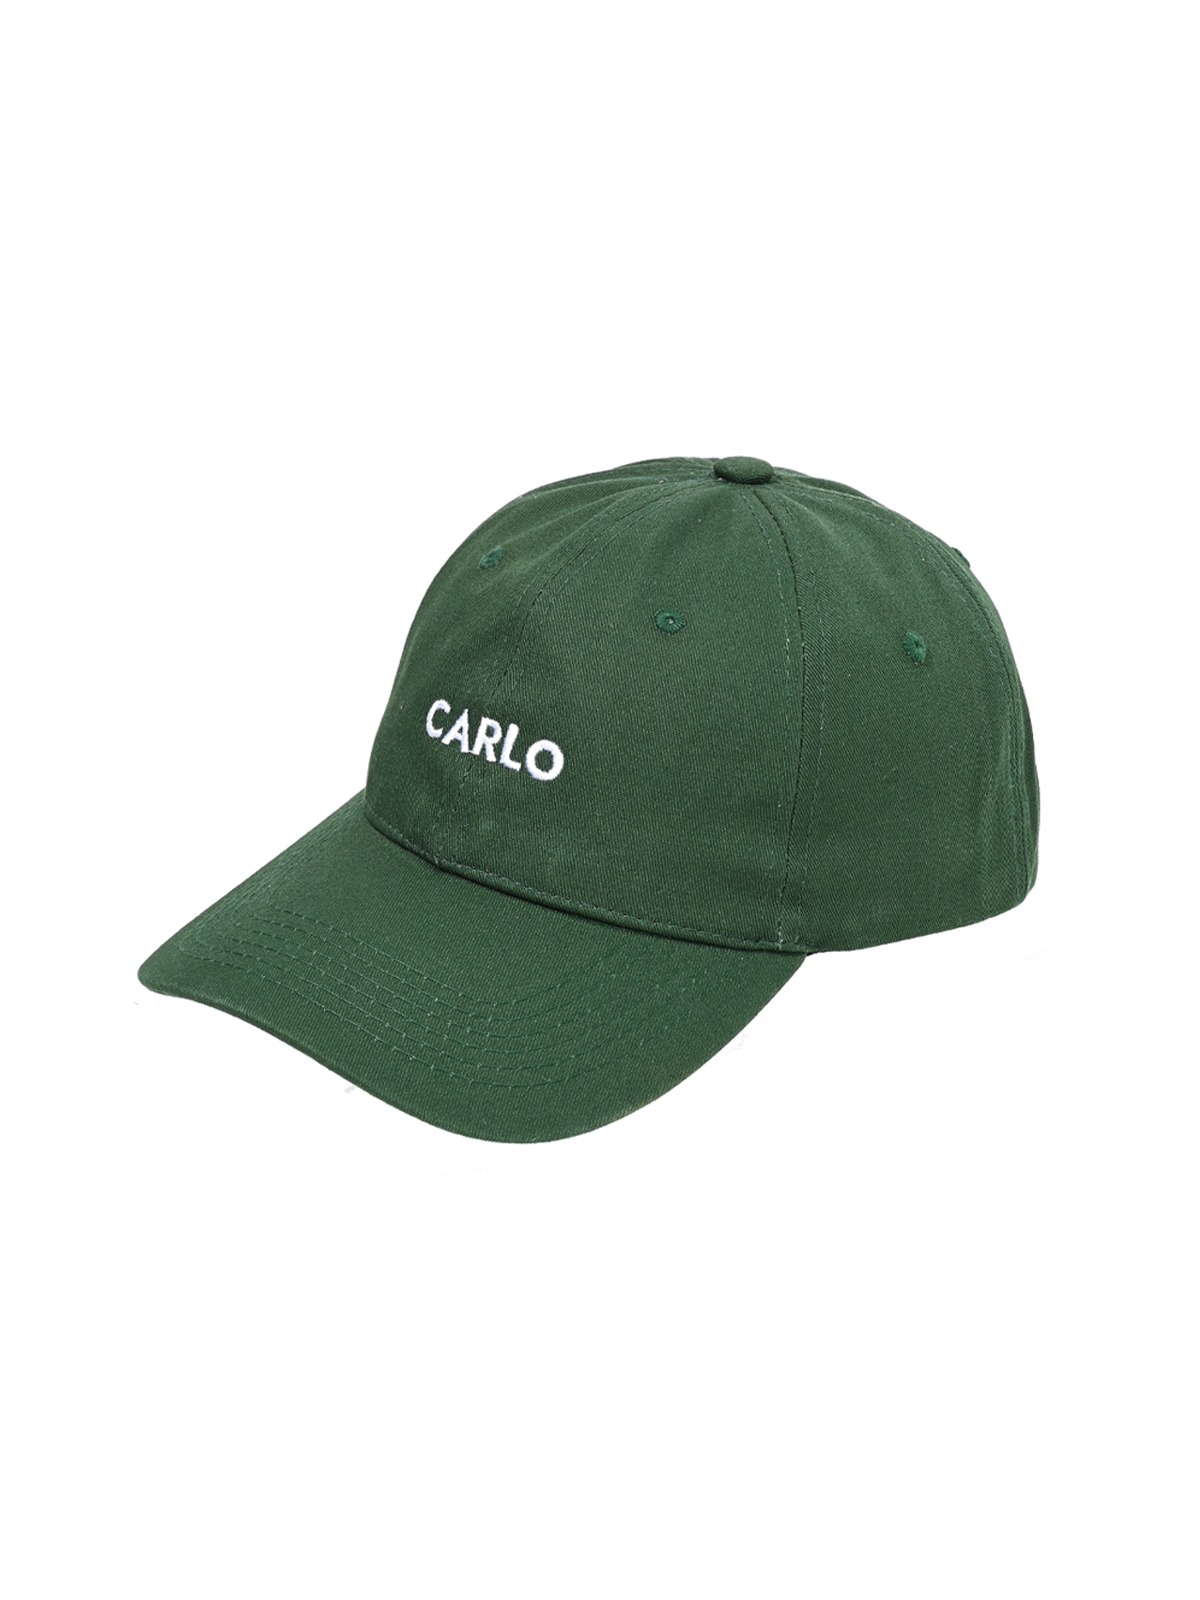 CARLO BALL CAP